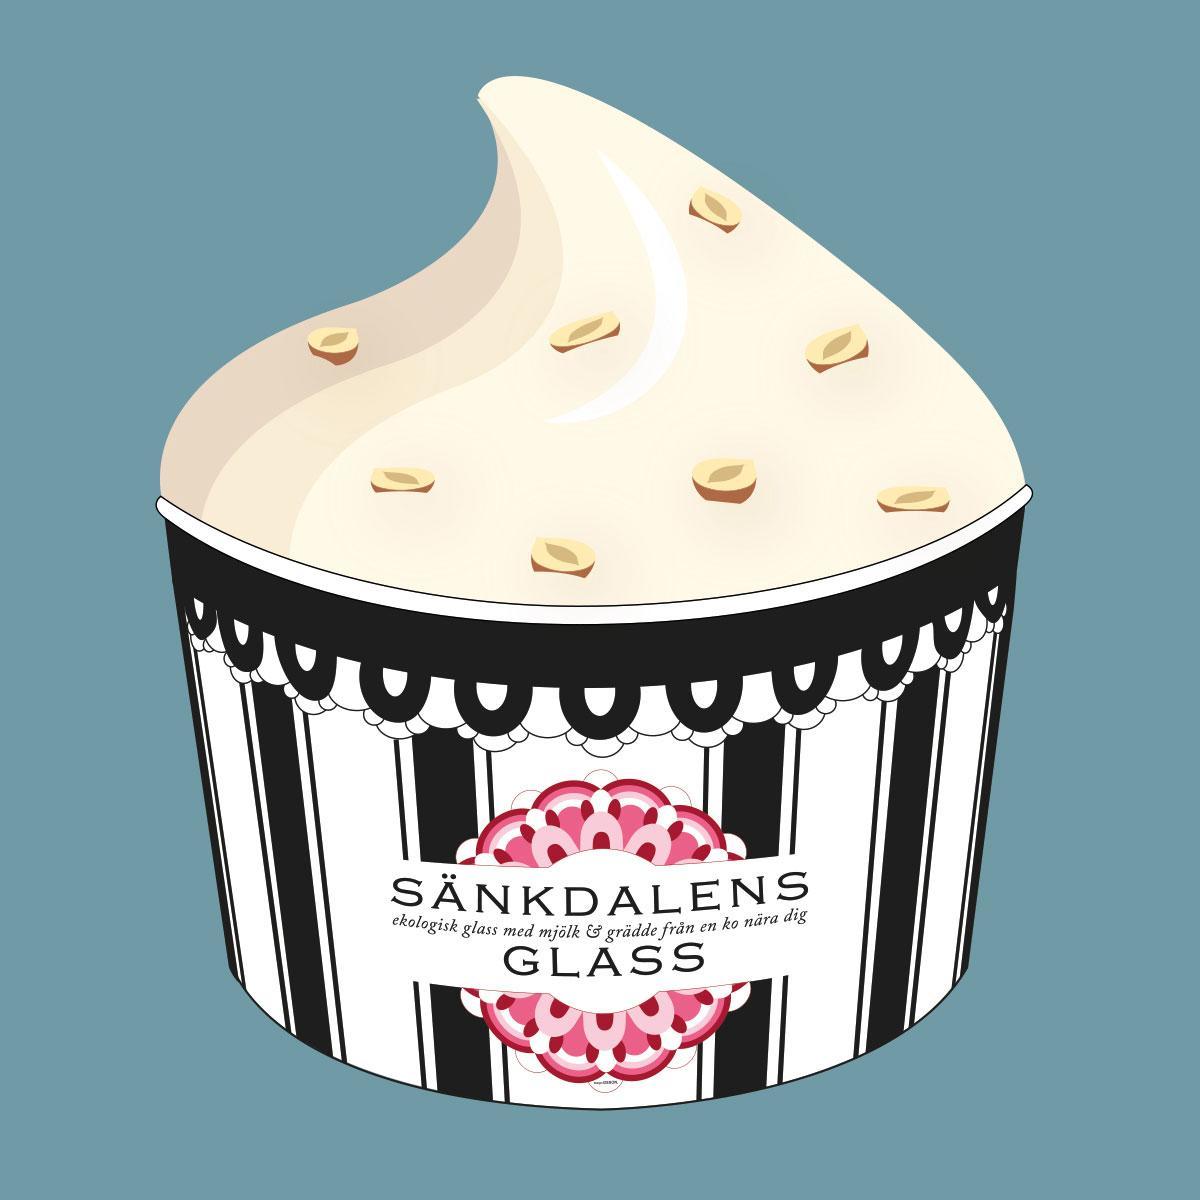 Hazelnut ice cream Sänkdalens glass